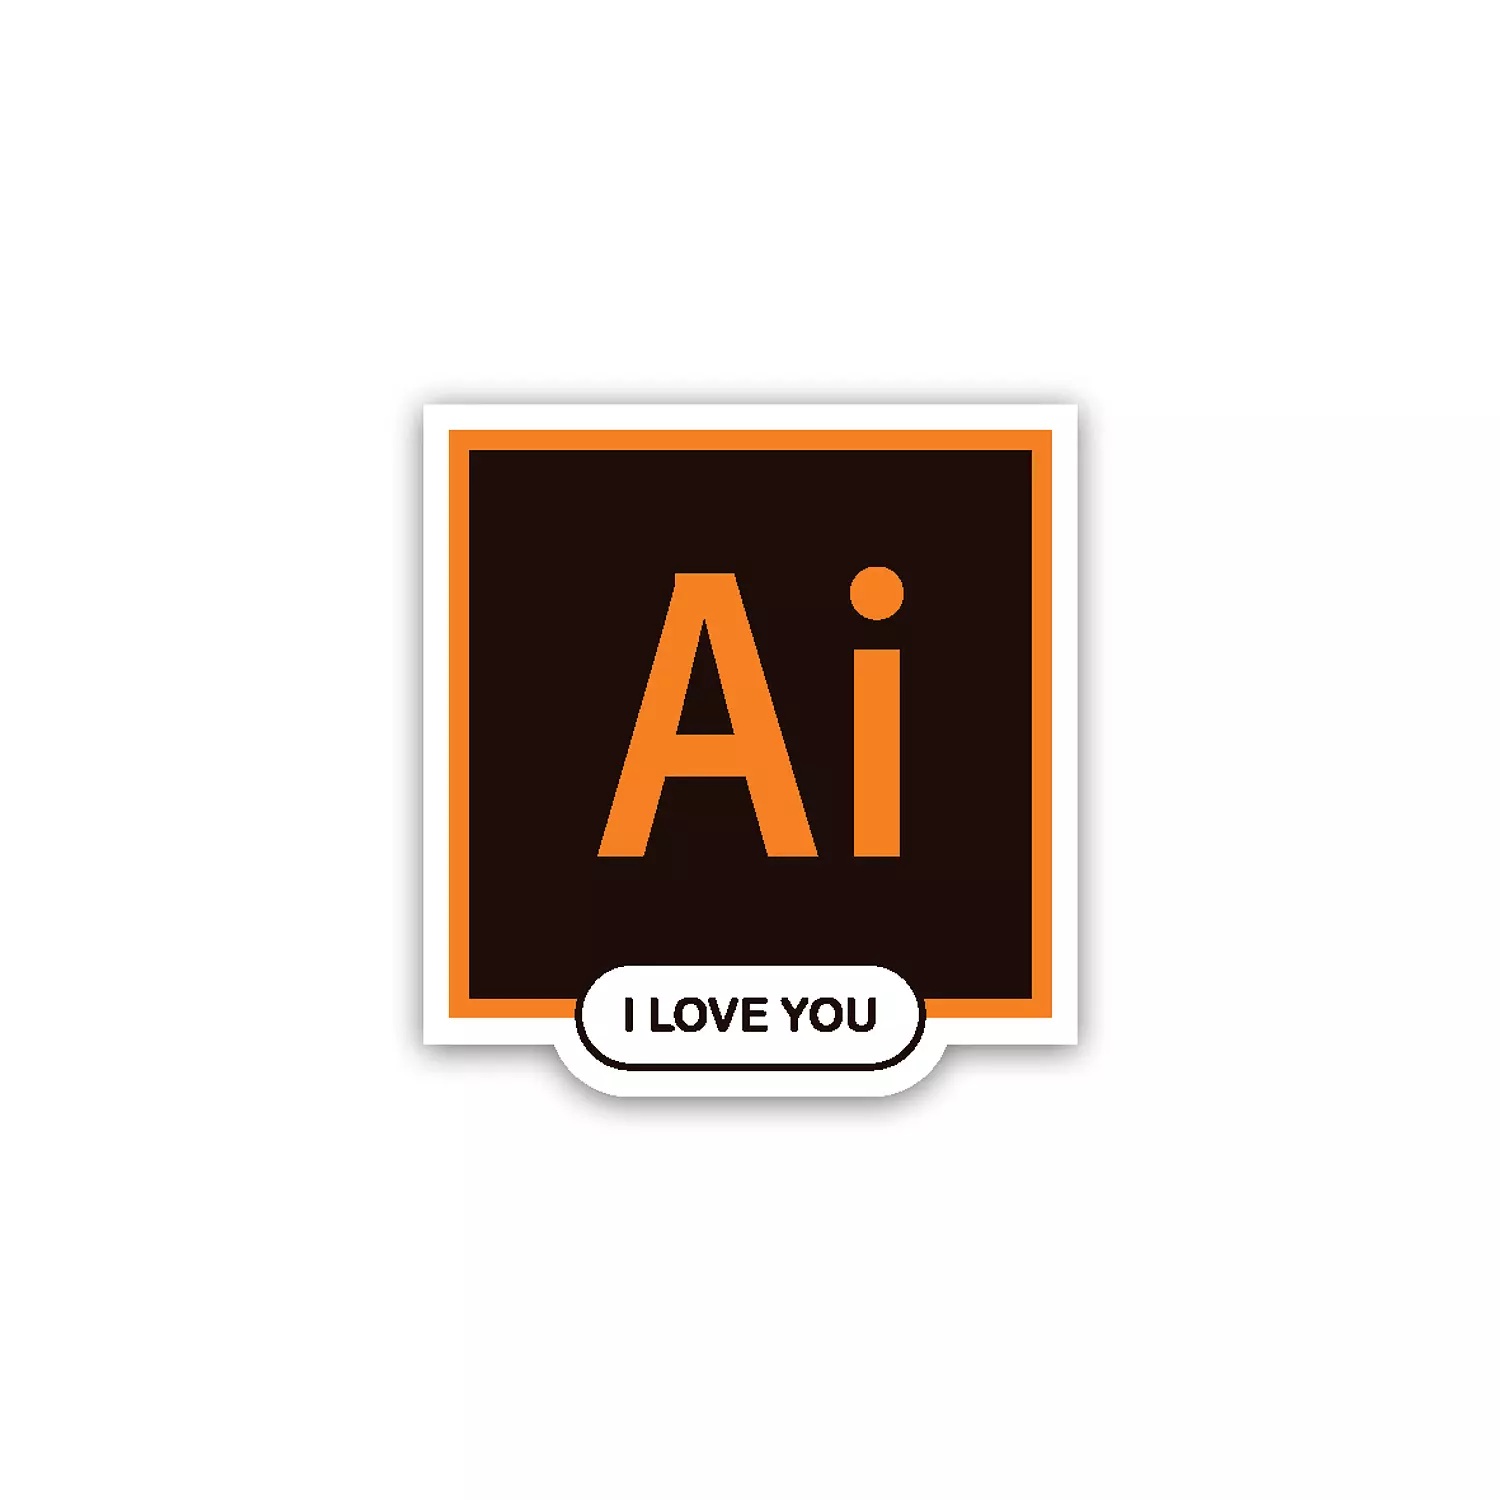 Adobe Icon - Microsoft - I love you  hover image